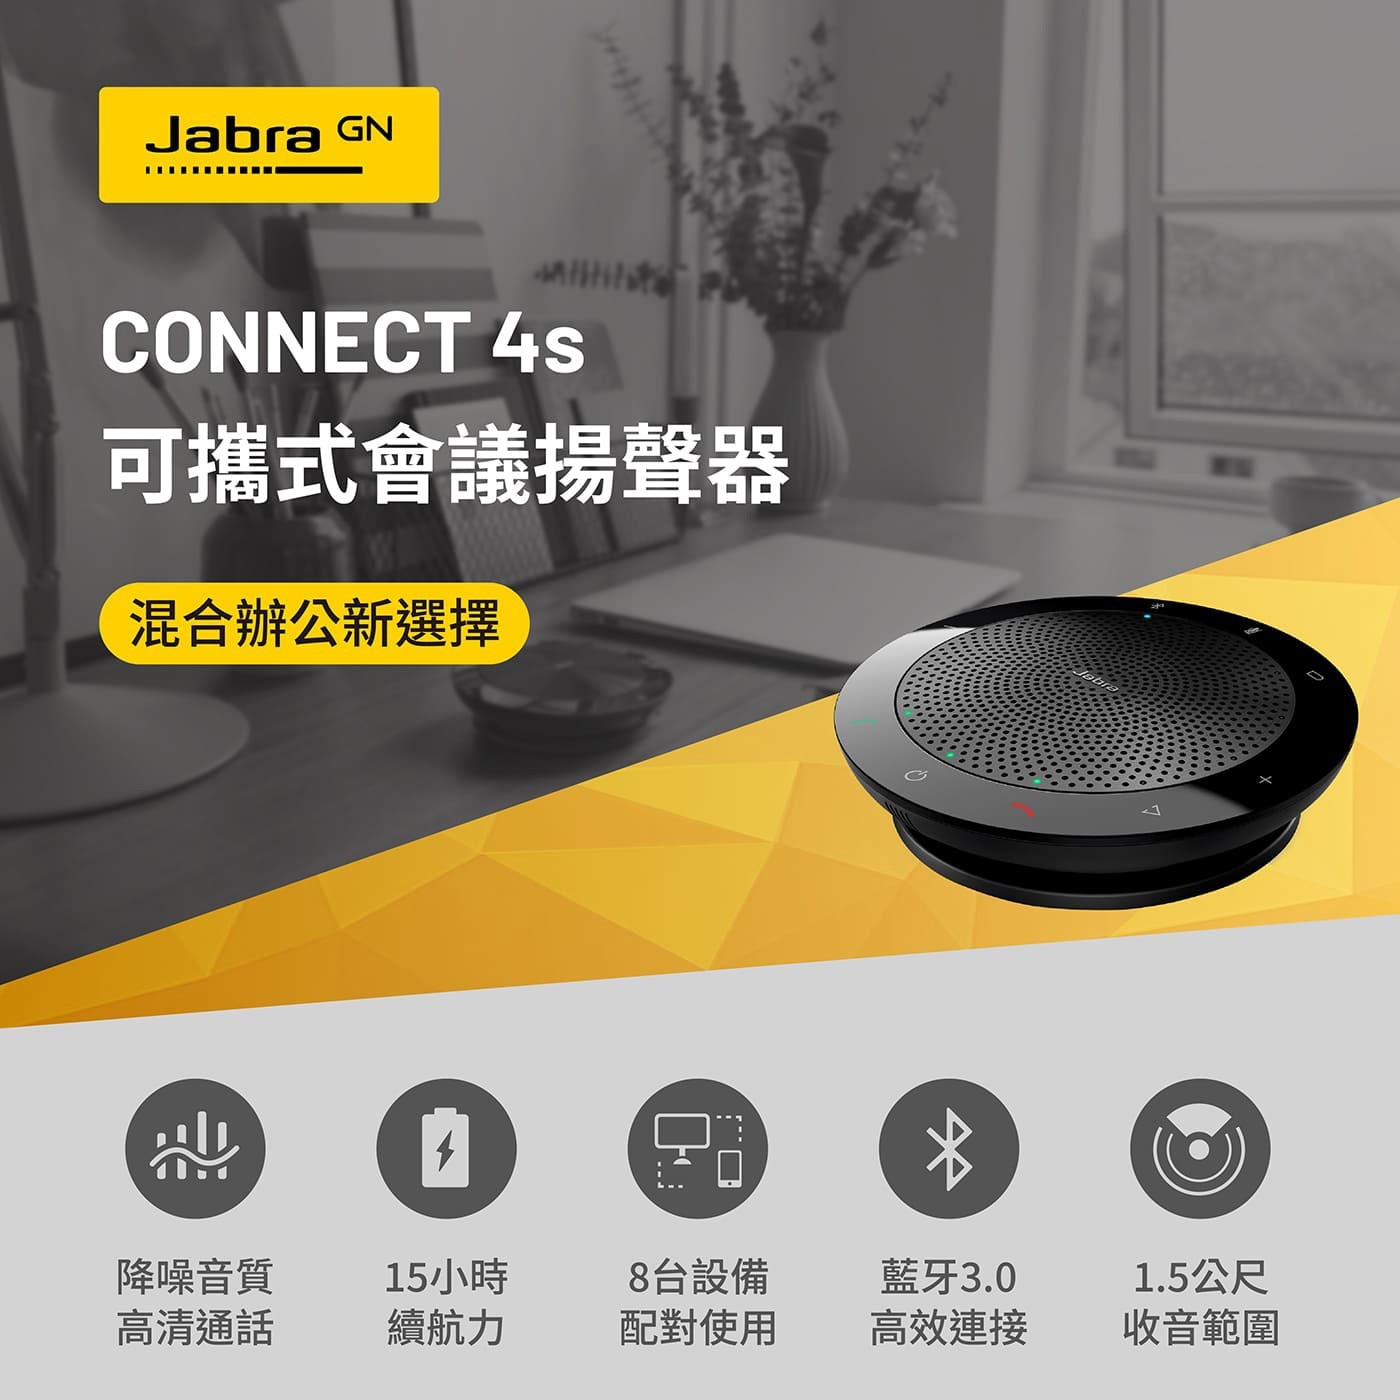 Jabra Connect 4s 會議用藍牙音箱輕鬆連接 PC 或筆記本電腦，無需設置，全指向麥克風- 功能強大的麥克風，可在 1.5 米範圍內收音，還能保留豐富的細節。